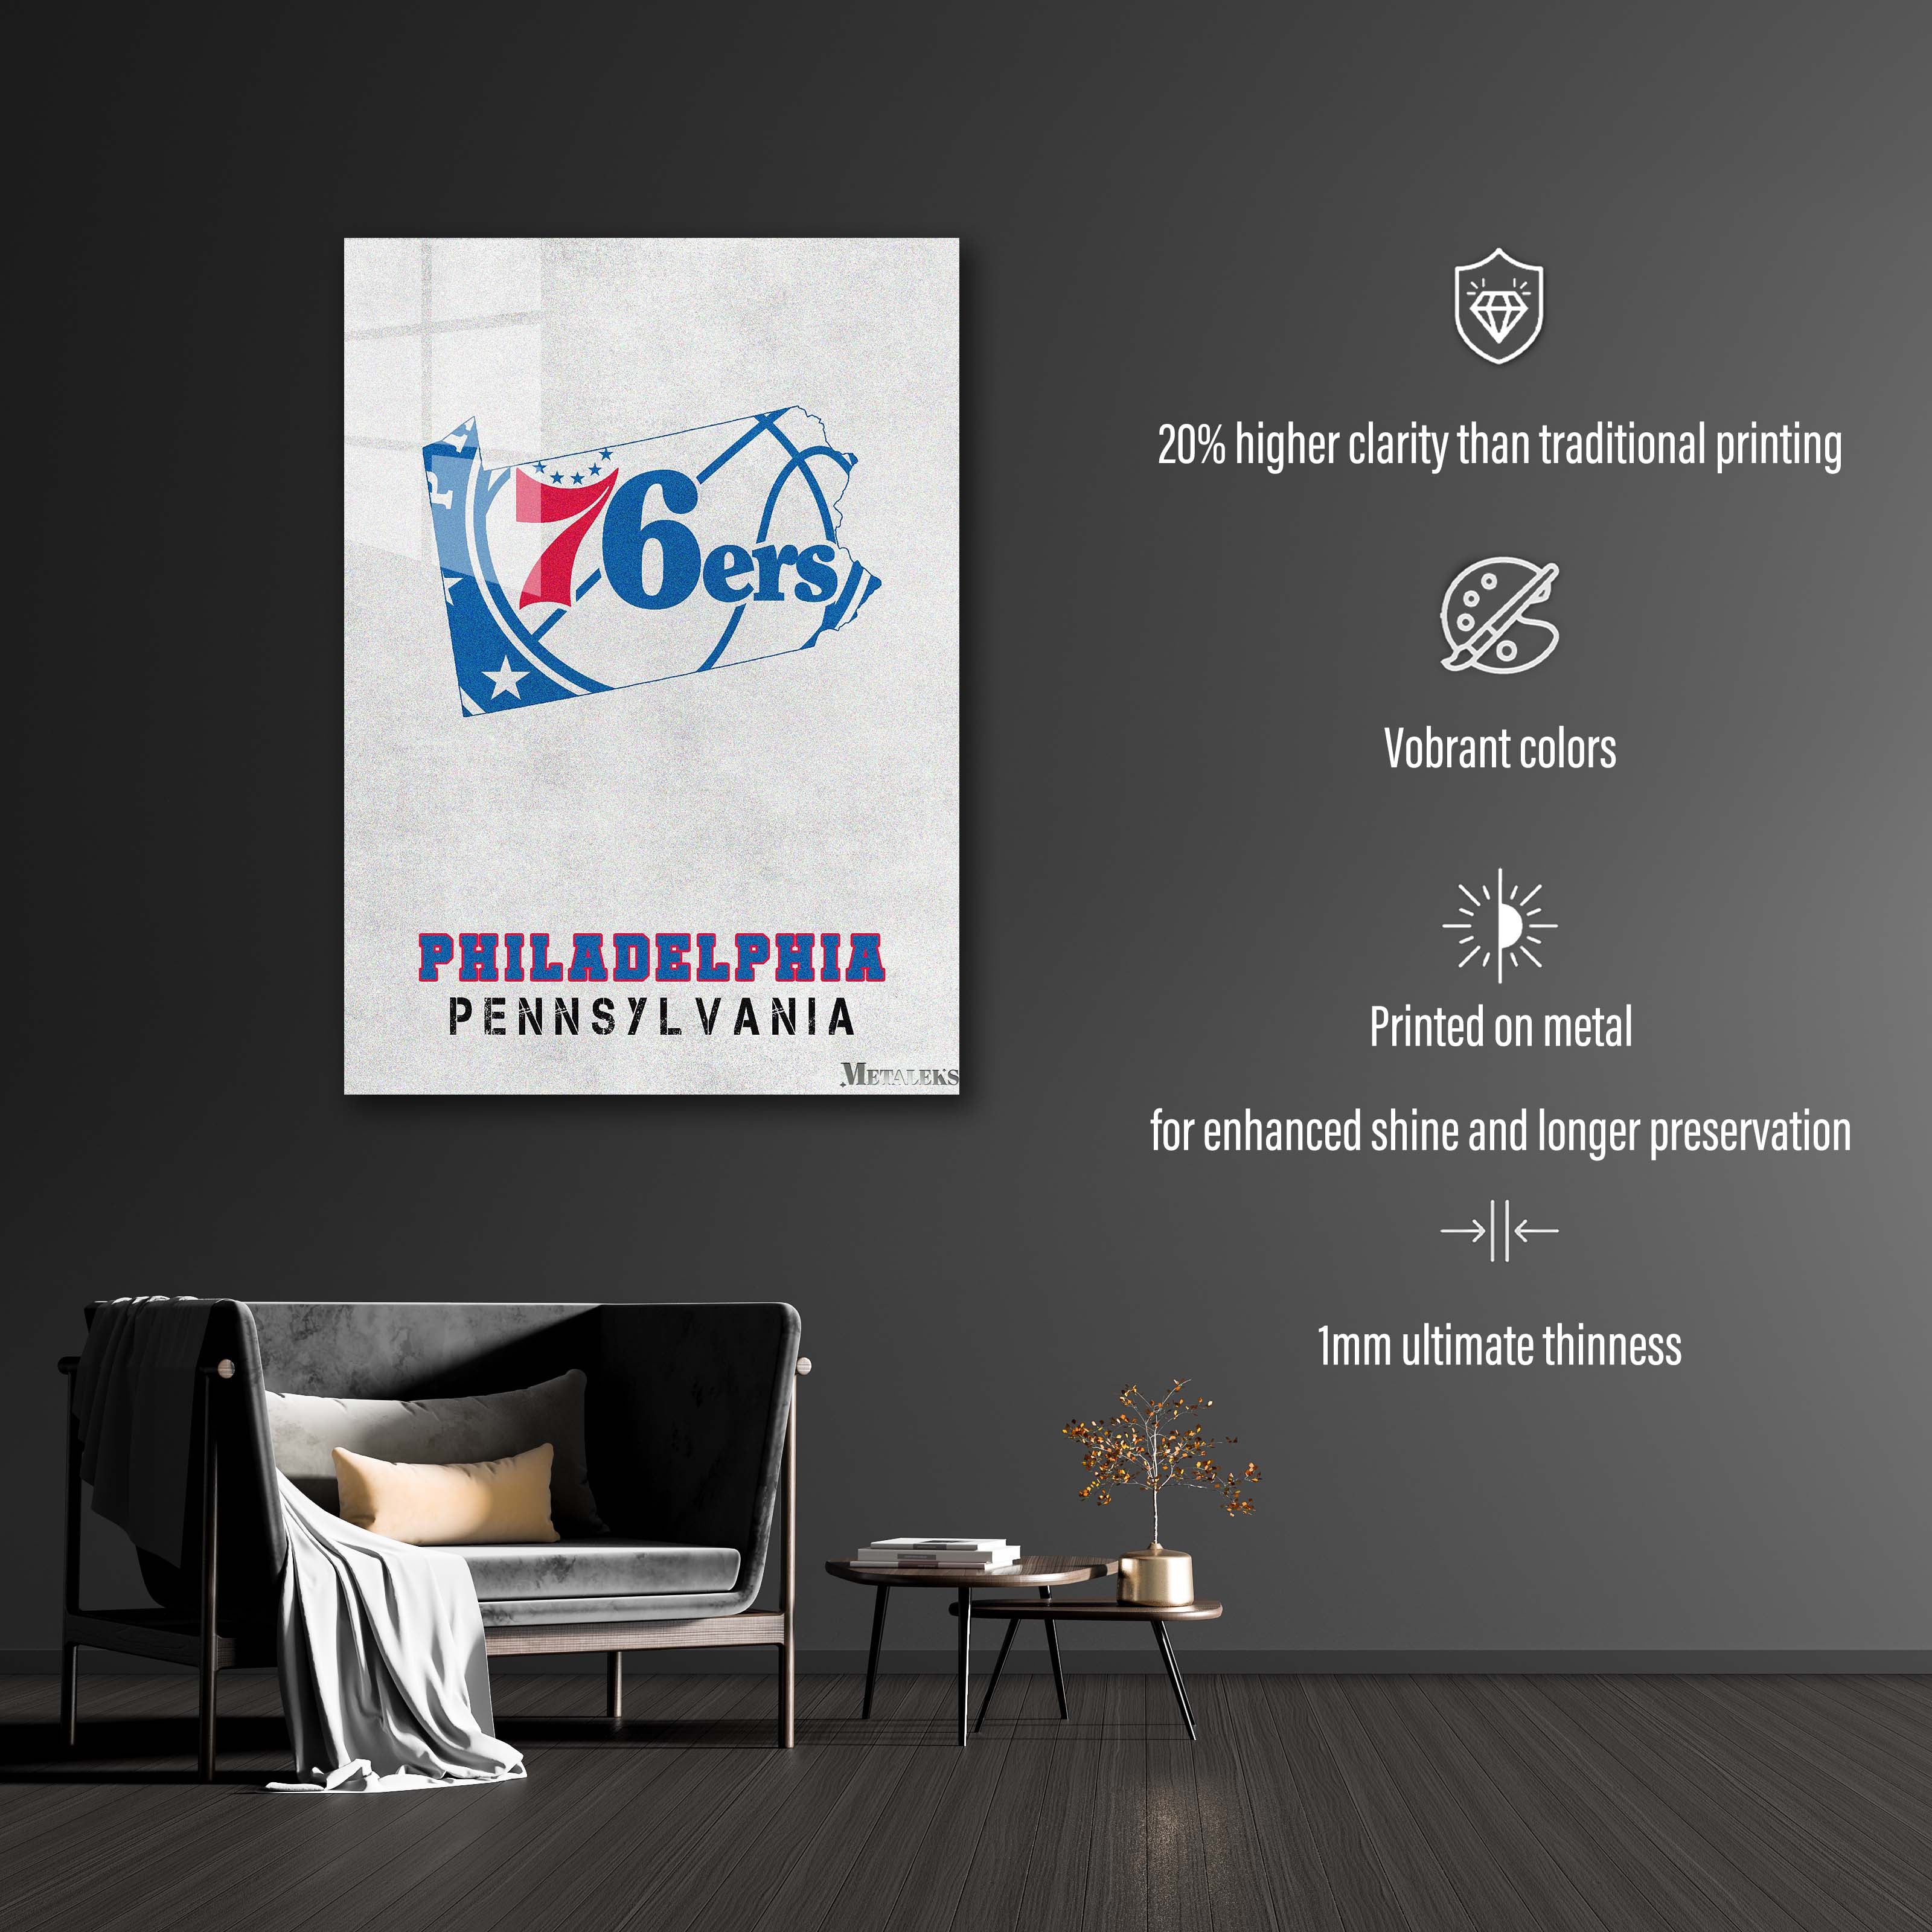 Philadelphia 76ers-designed by @Hoang Van Thuan